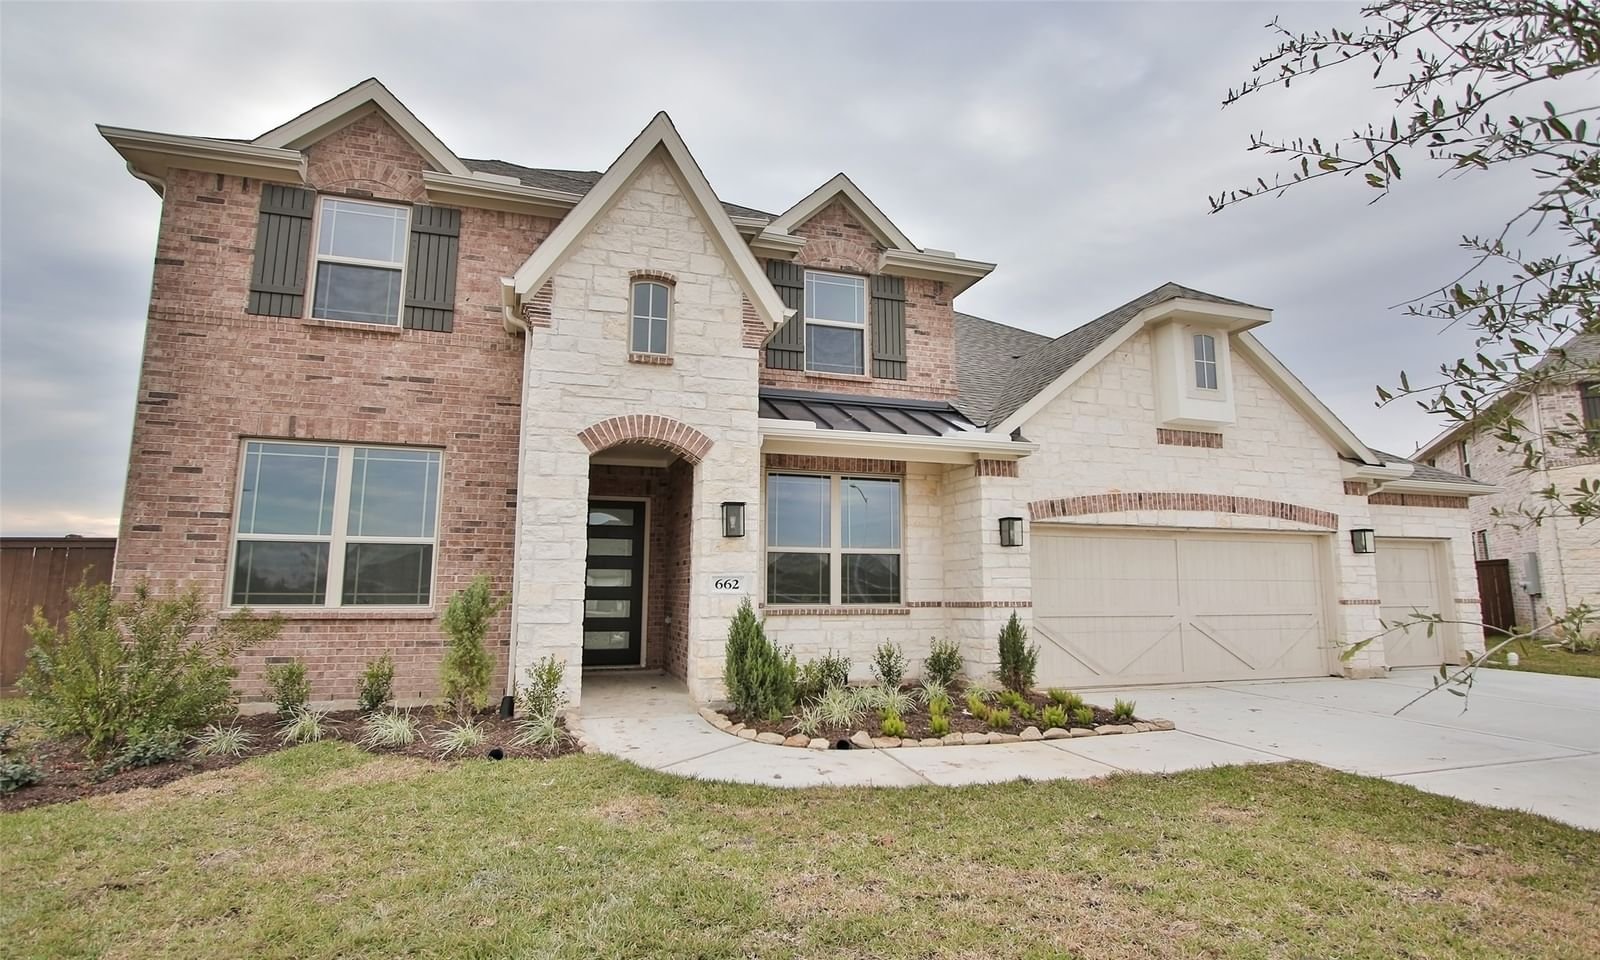 Real estate property located at 662 Rita Blanca, Harris, Edgewater, Webster, TX, US